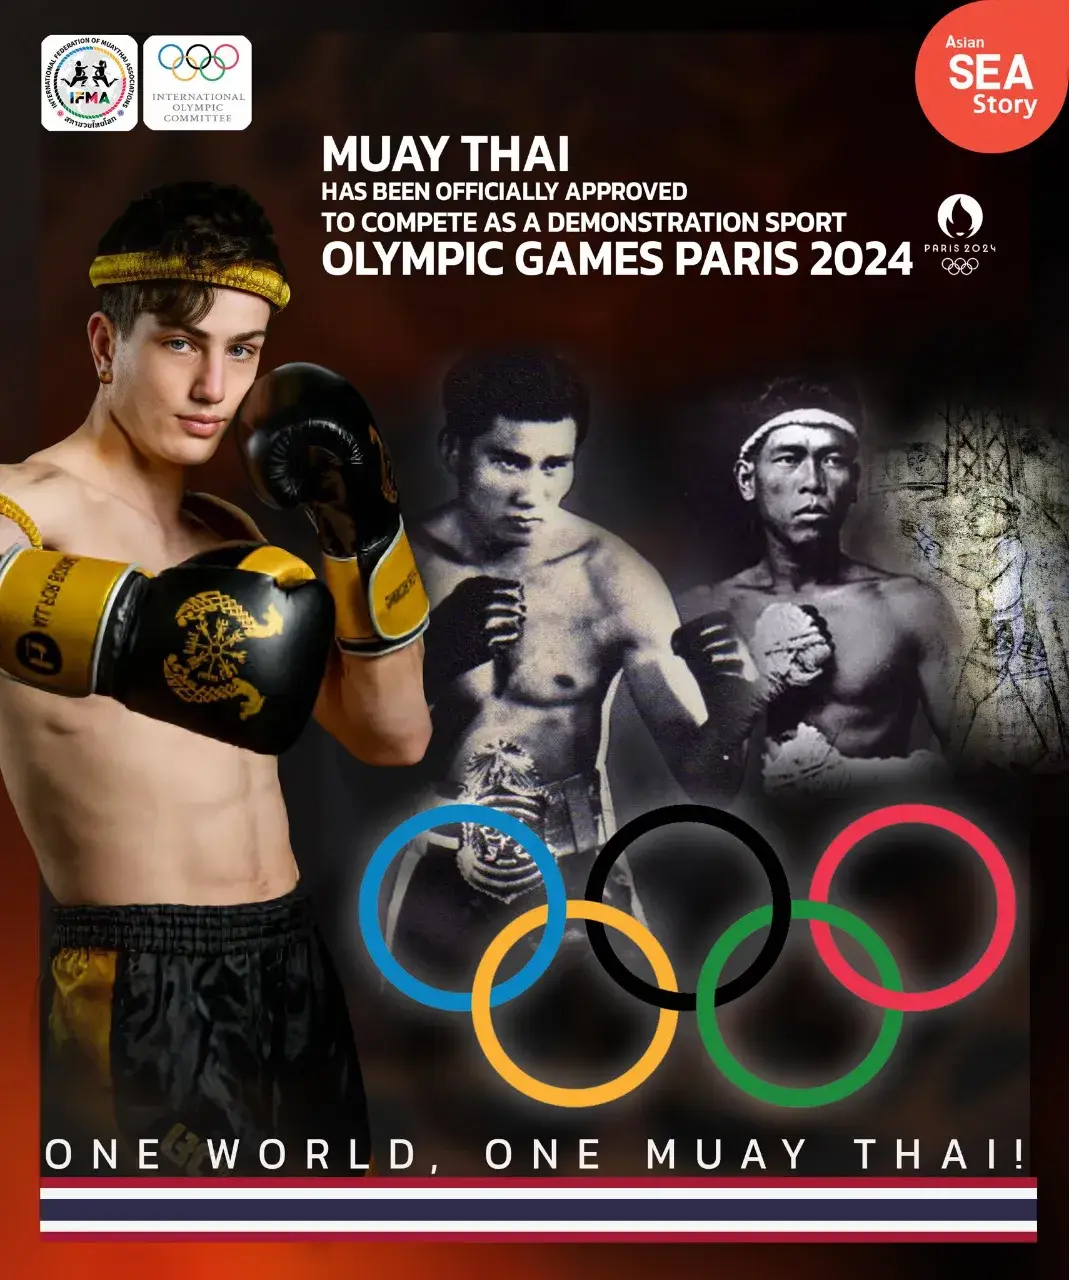 MUAYTHAI IN OLYMPIC GAMES 2024